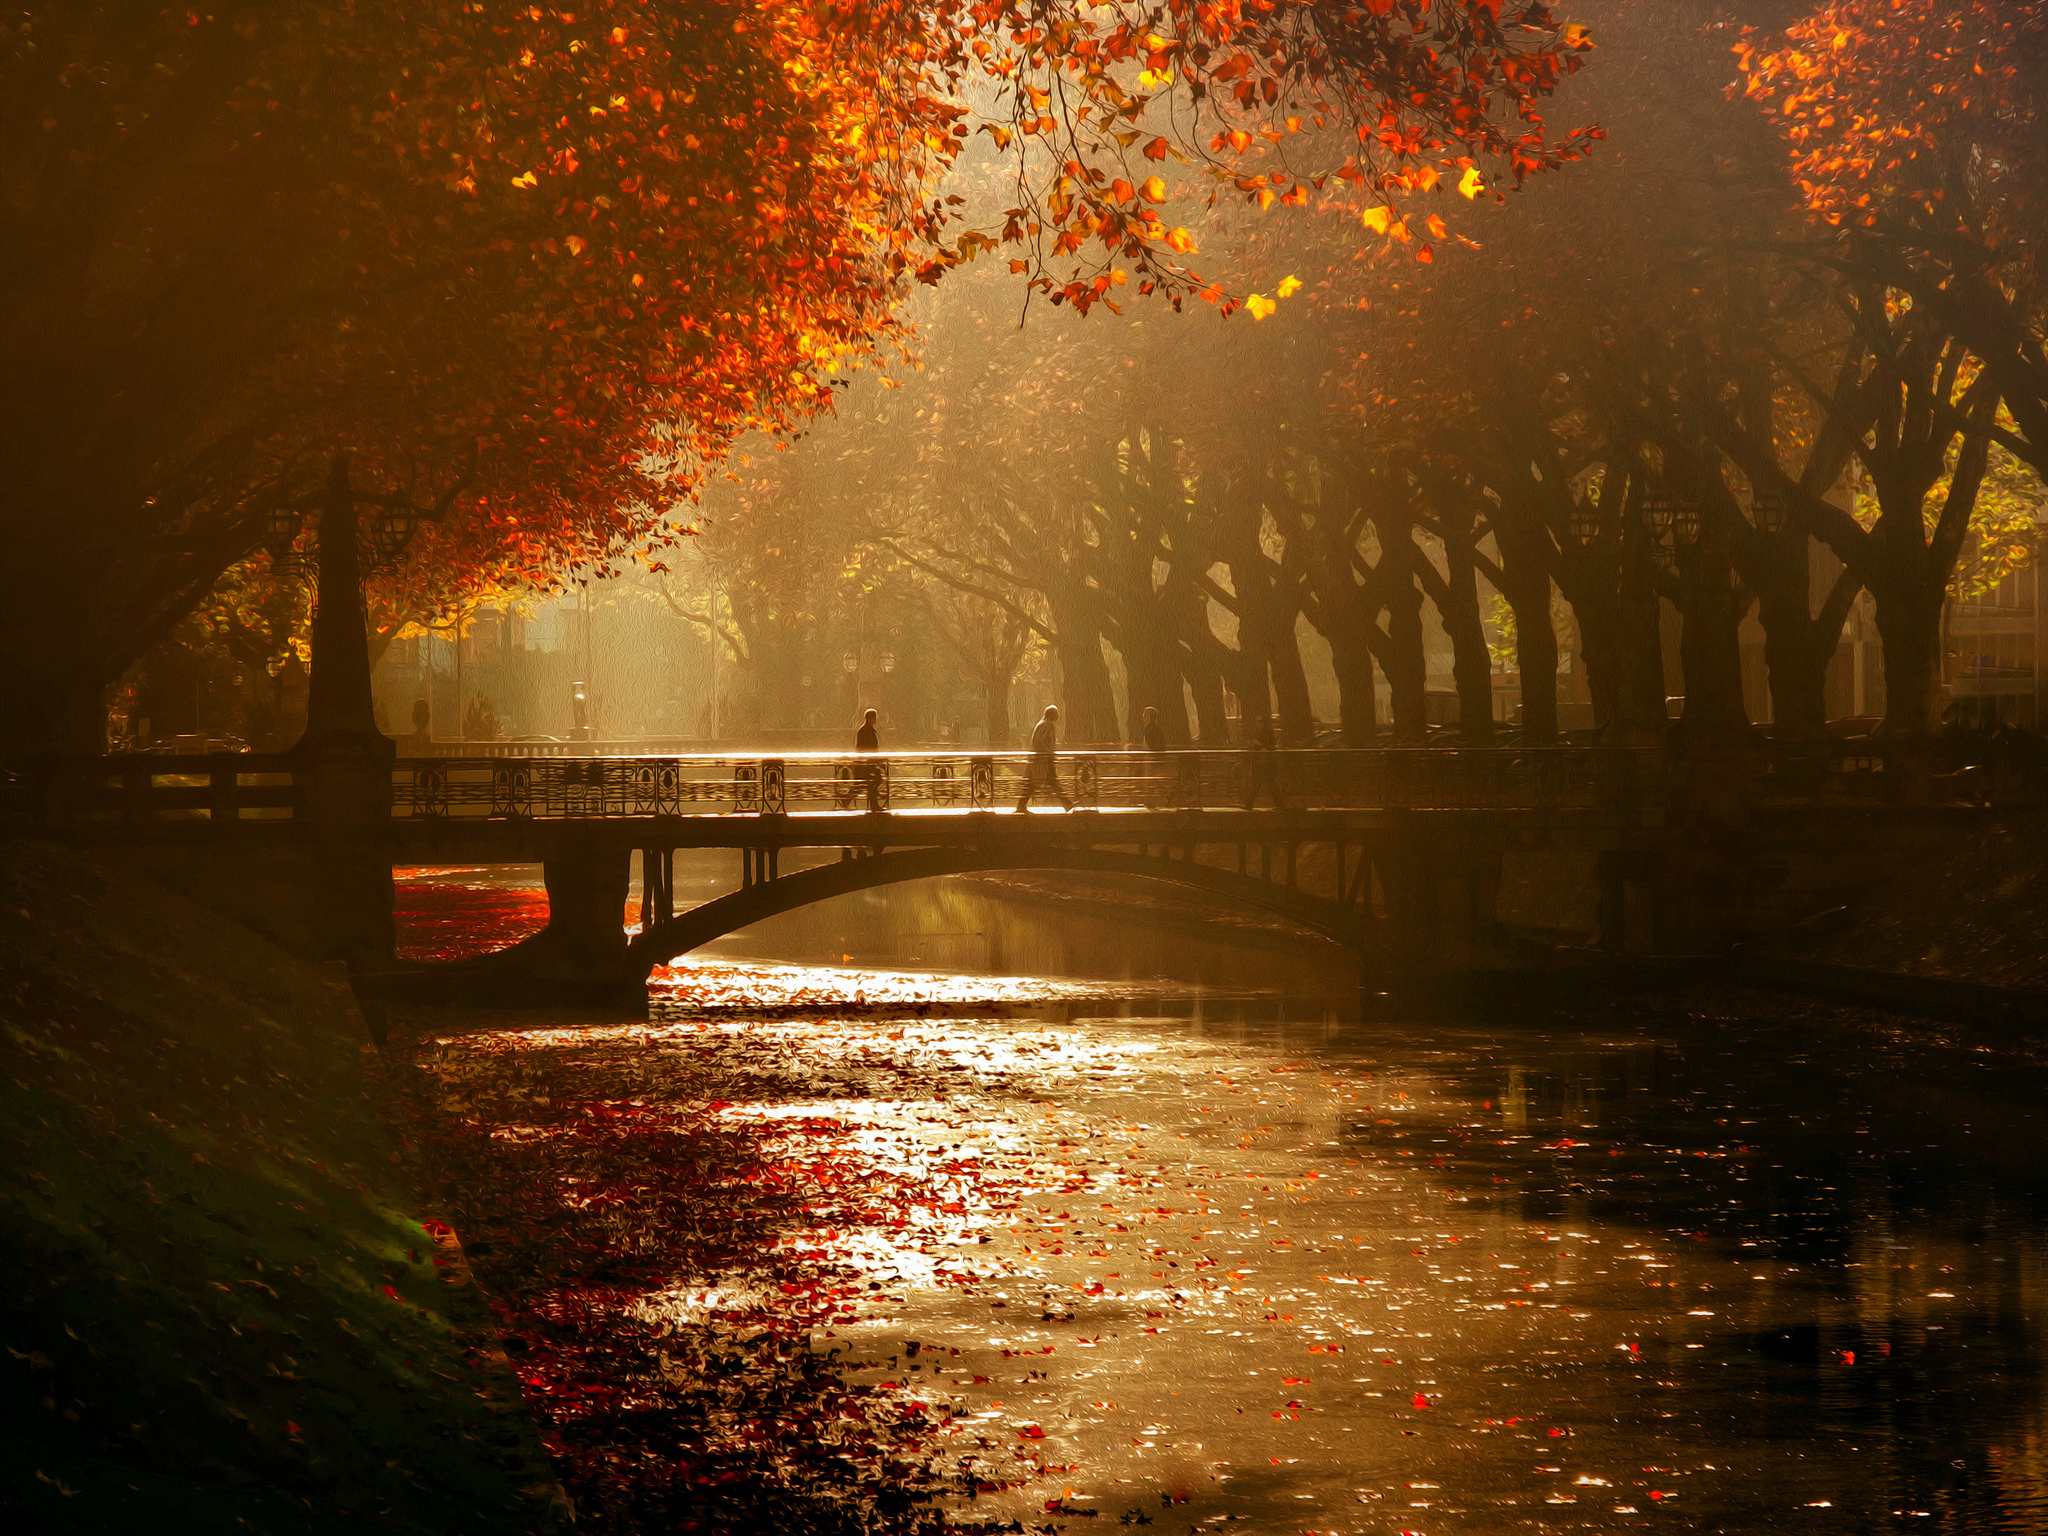 Dusseldorf Royal avenue bridge canal trees autumn mood wallpaper ...